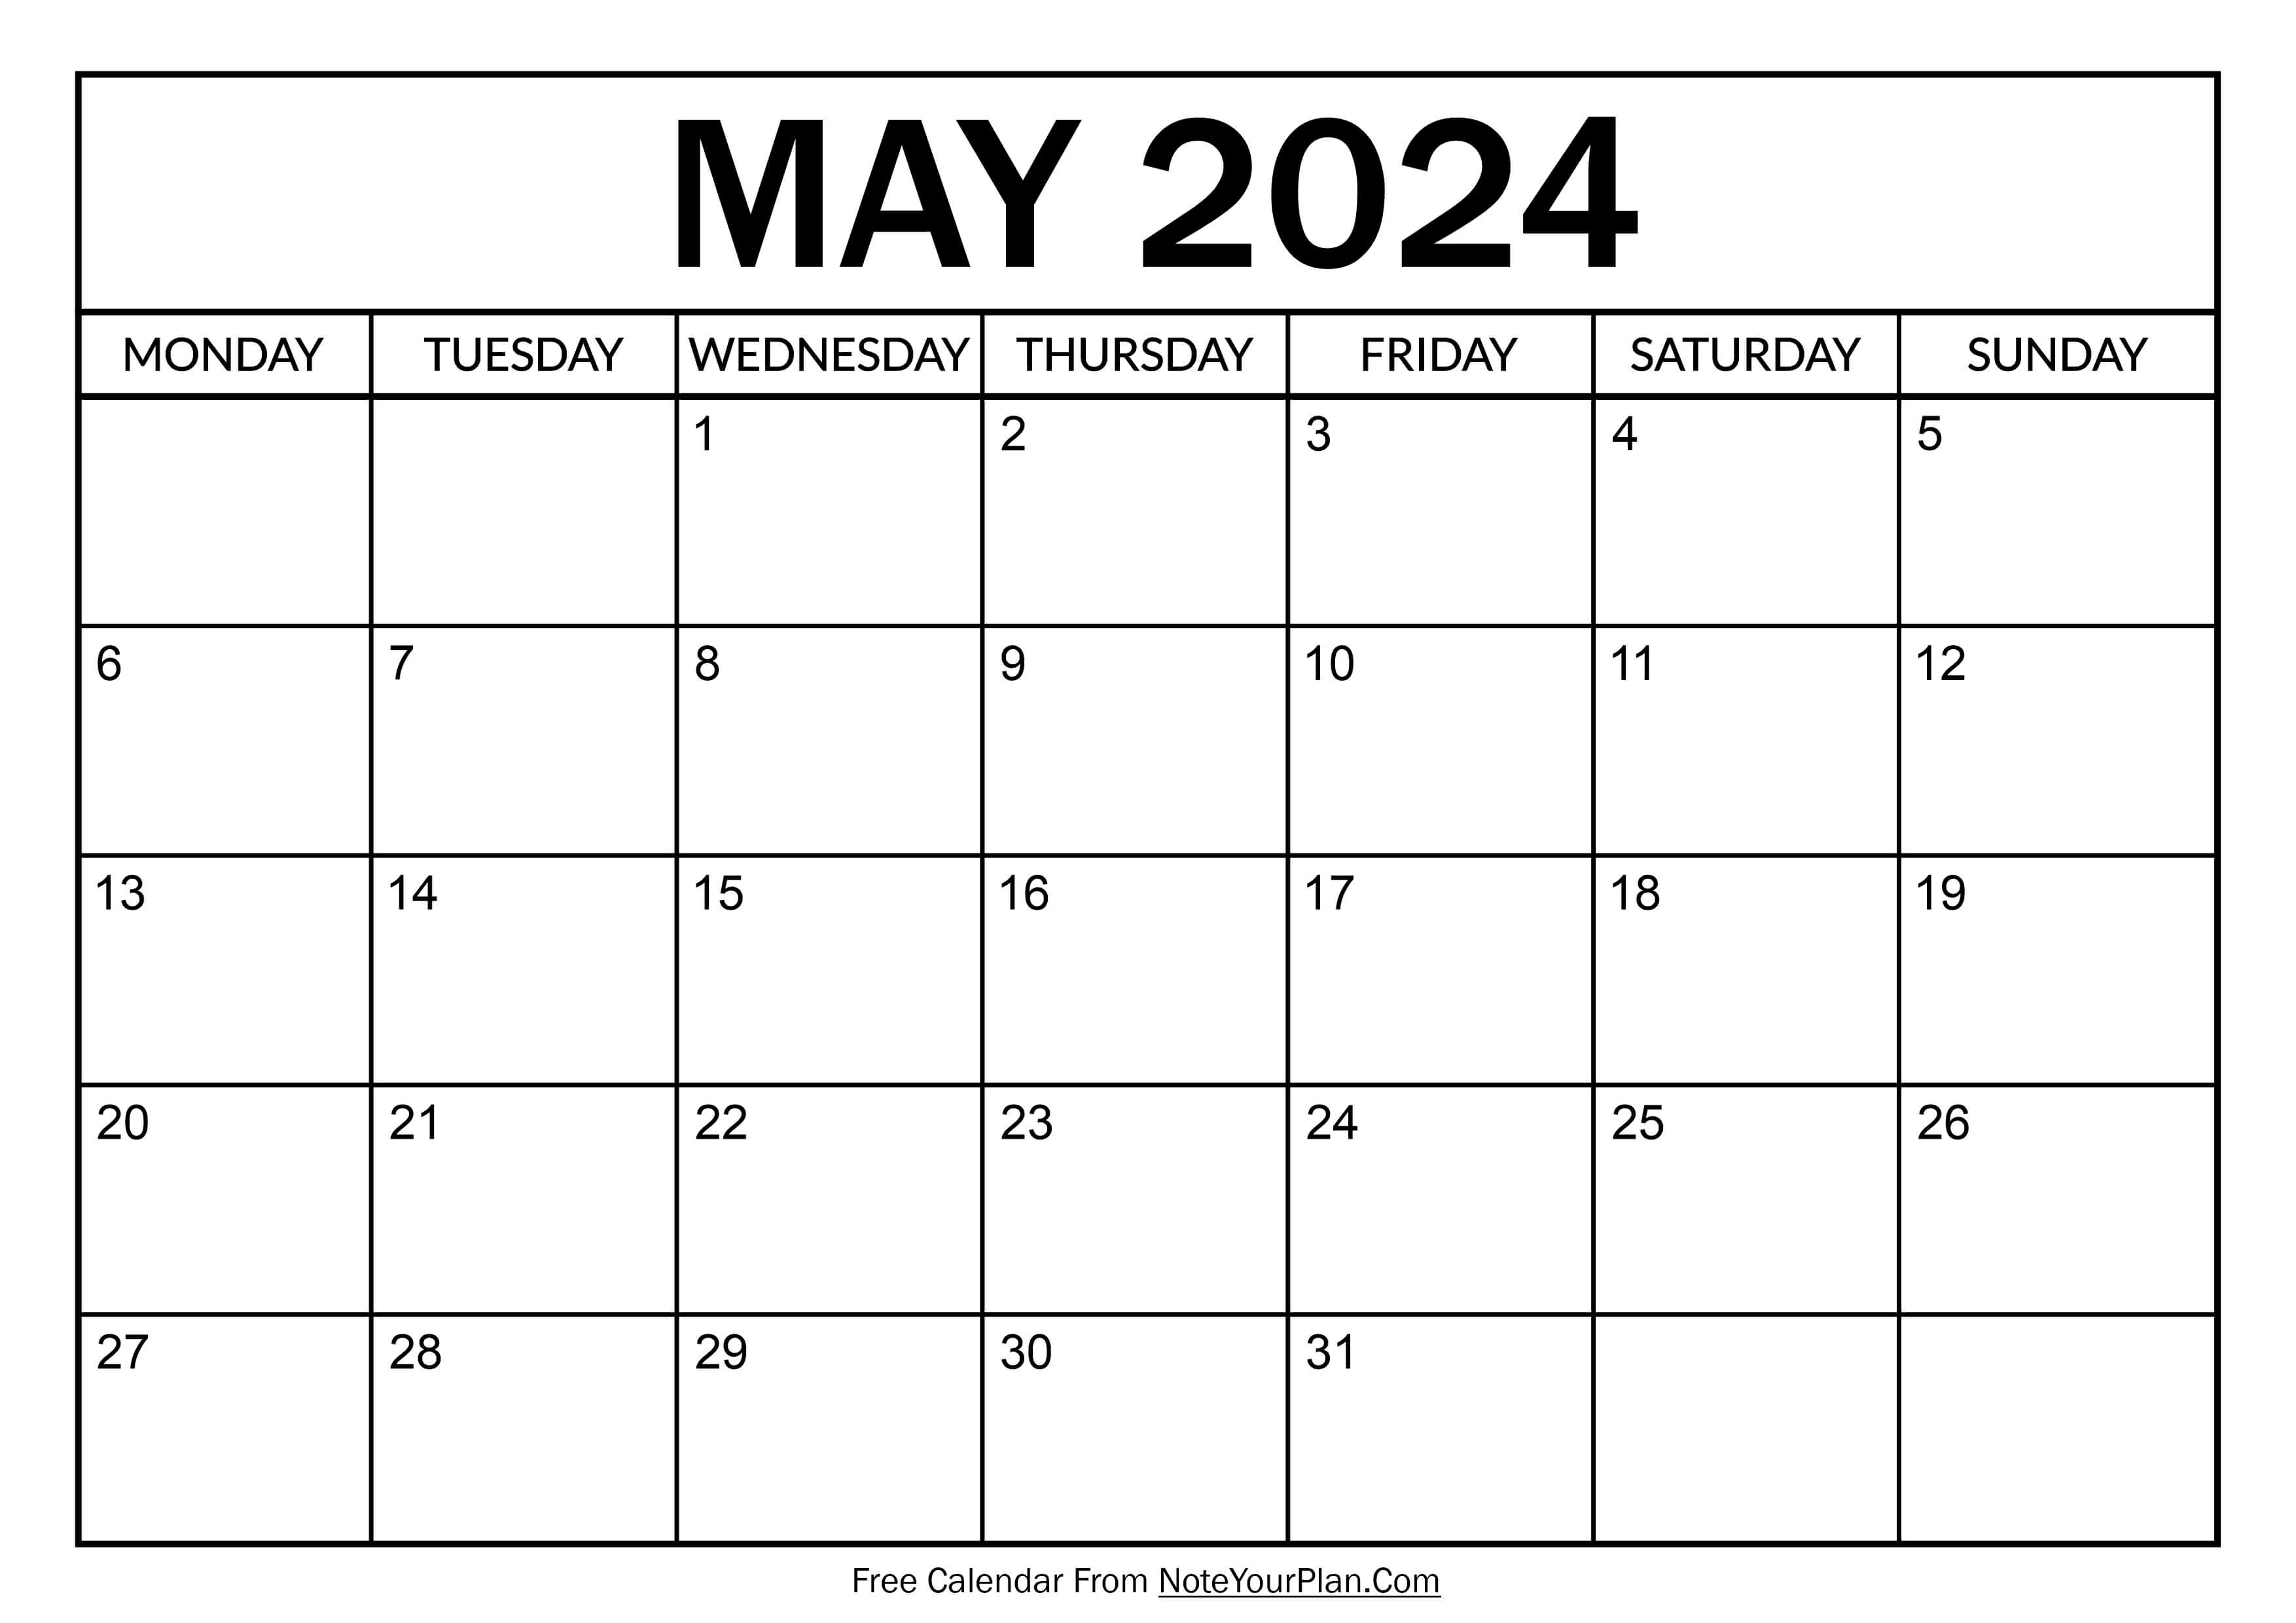 May 2024 Printable Calendar